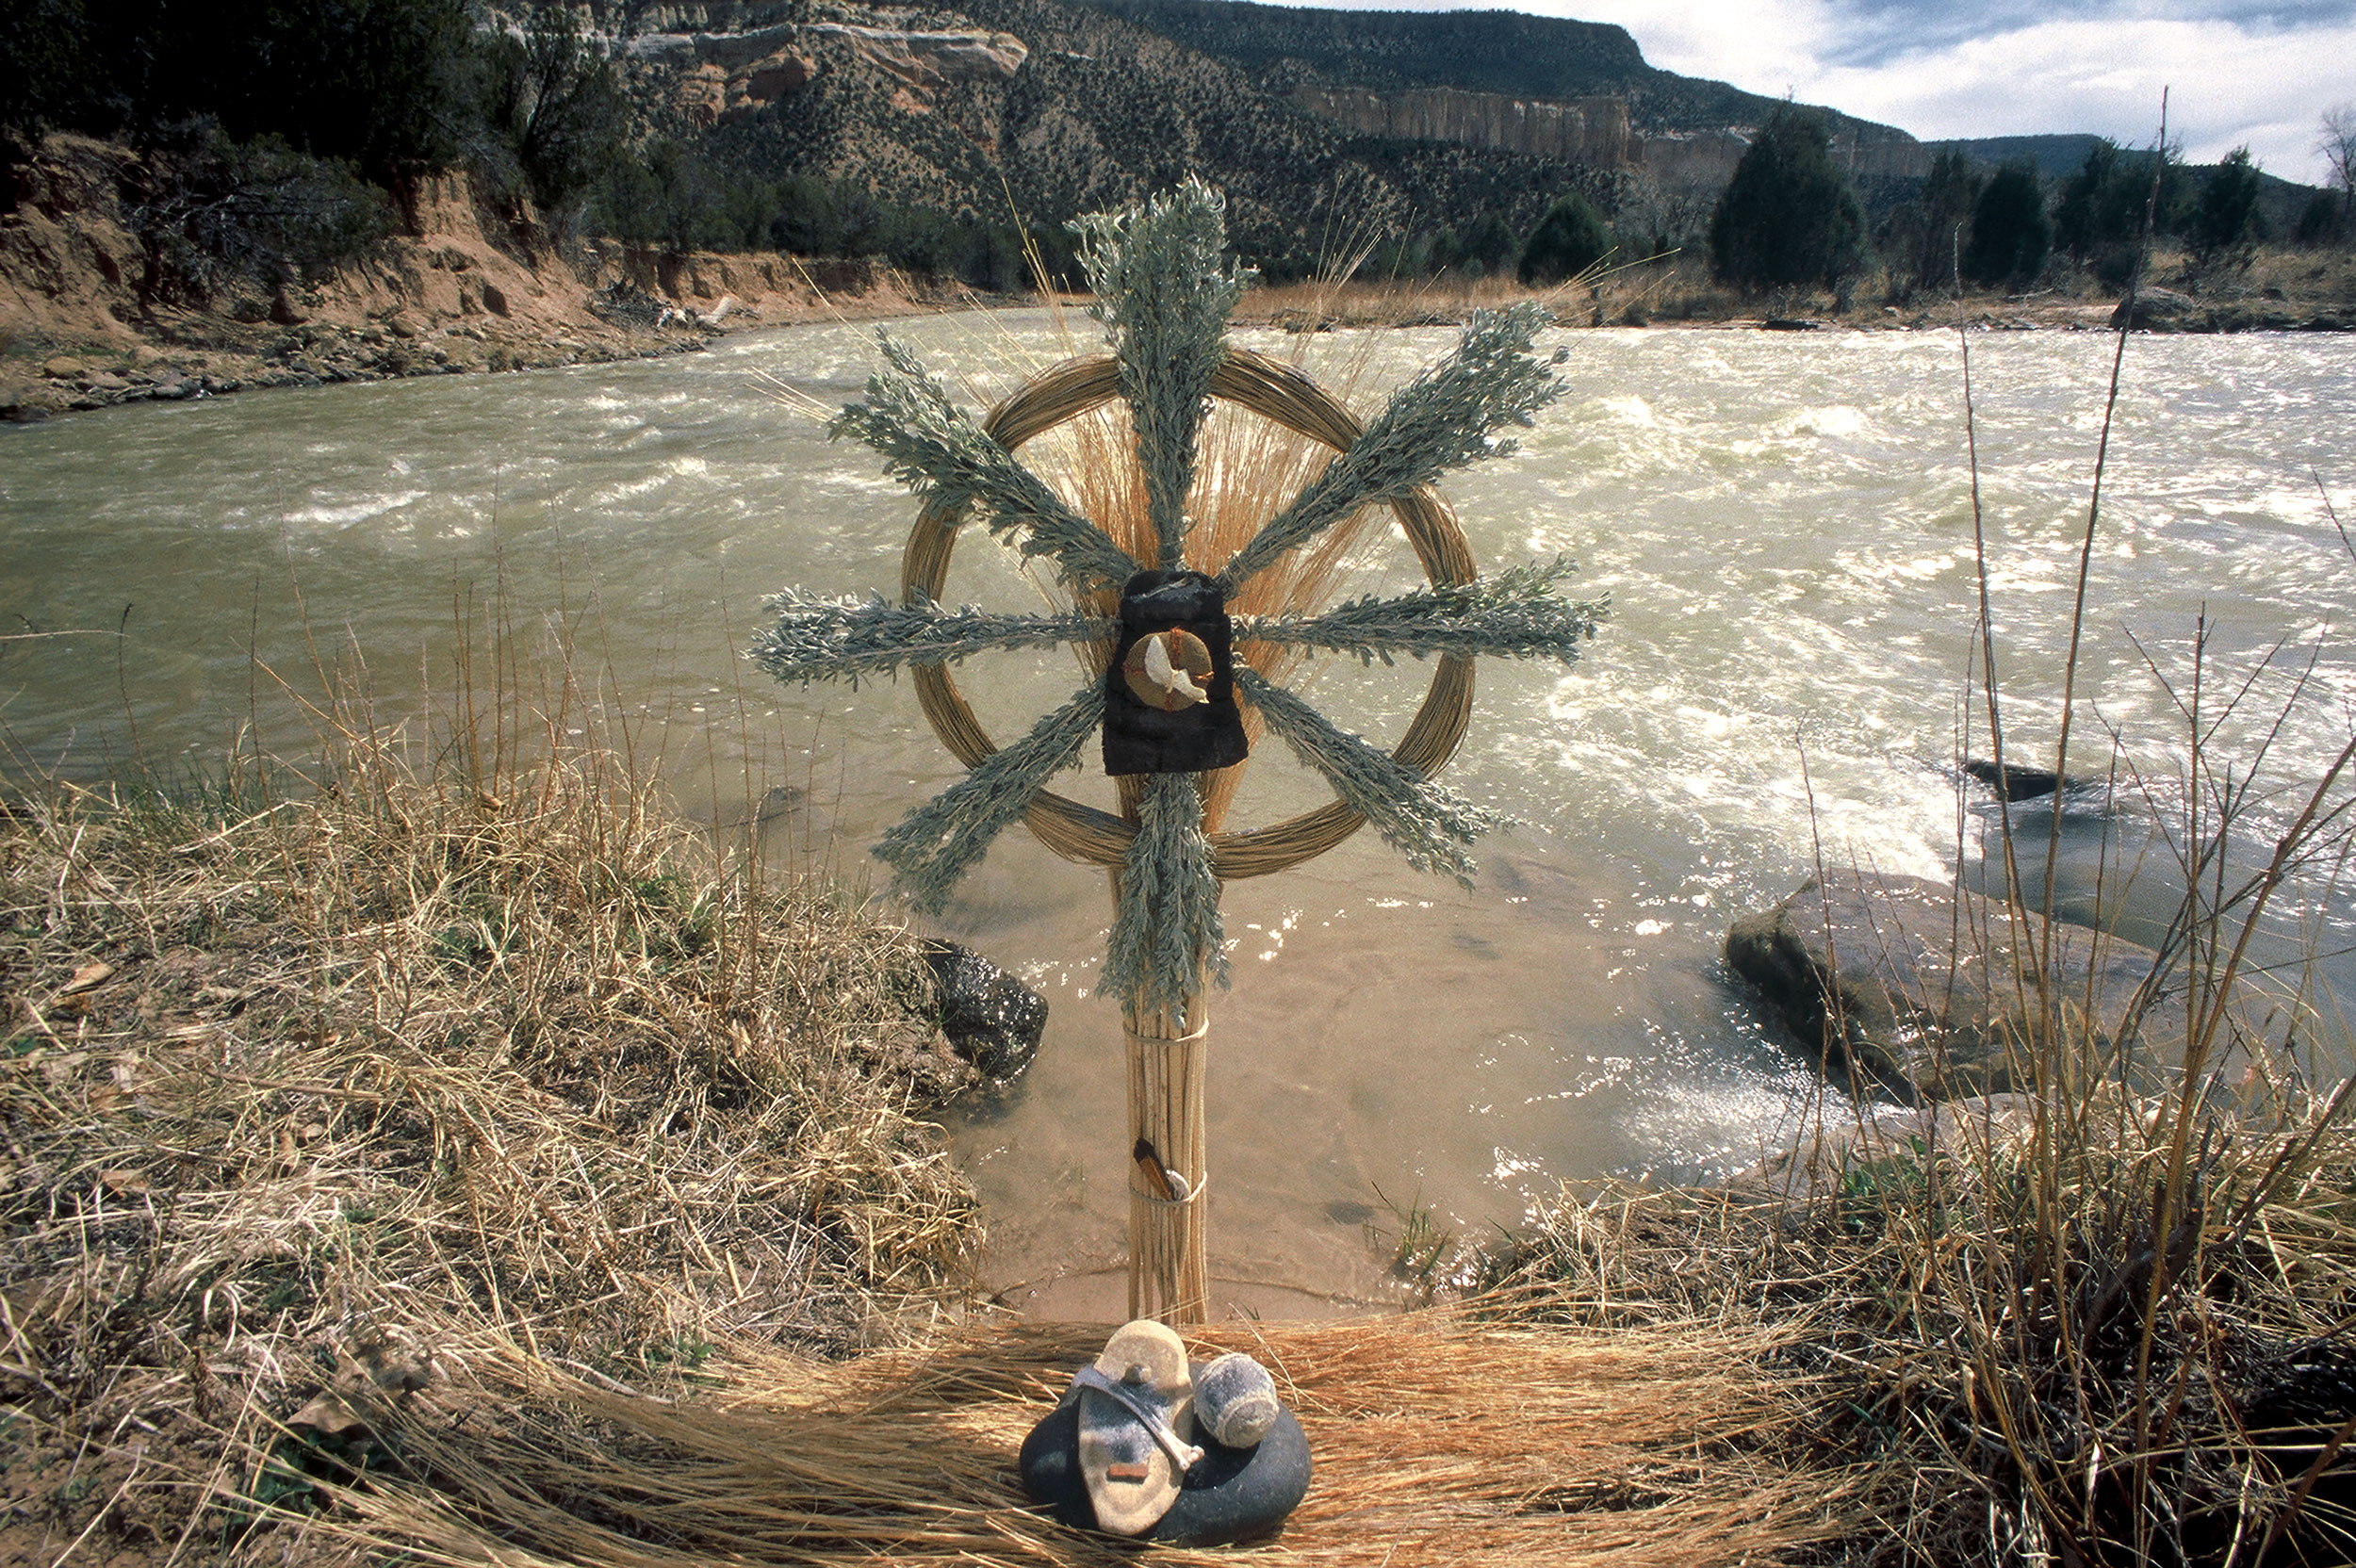 Chama River, Christ in the Desert Monastery, NM